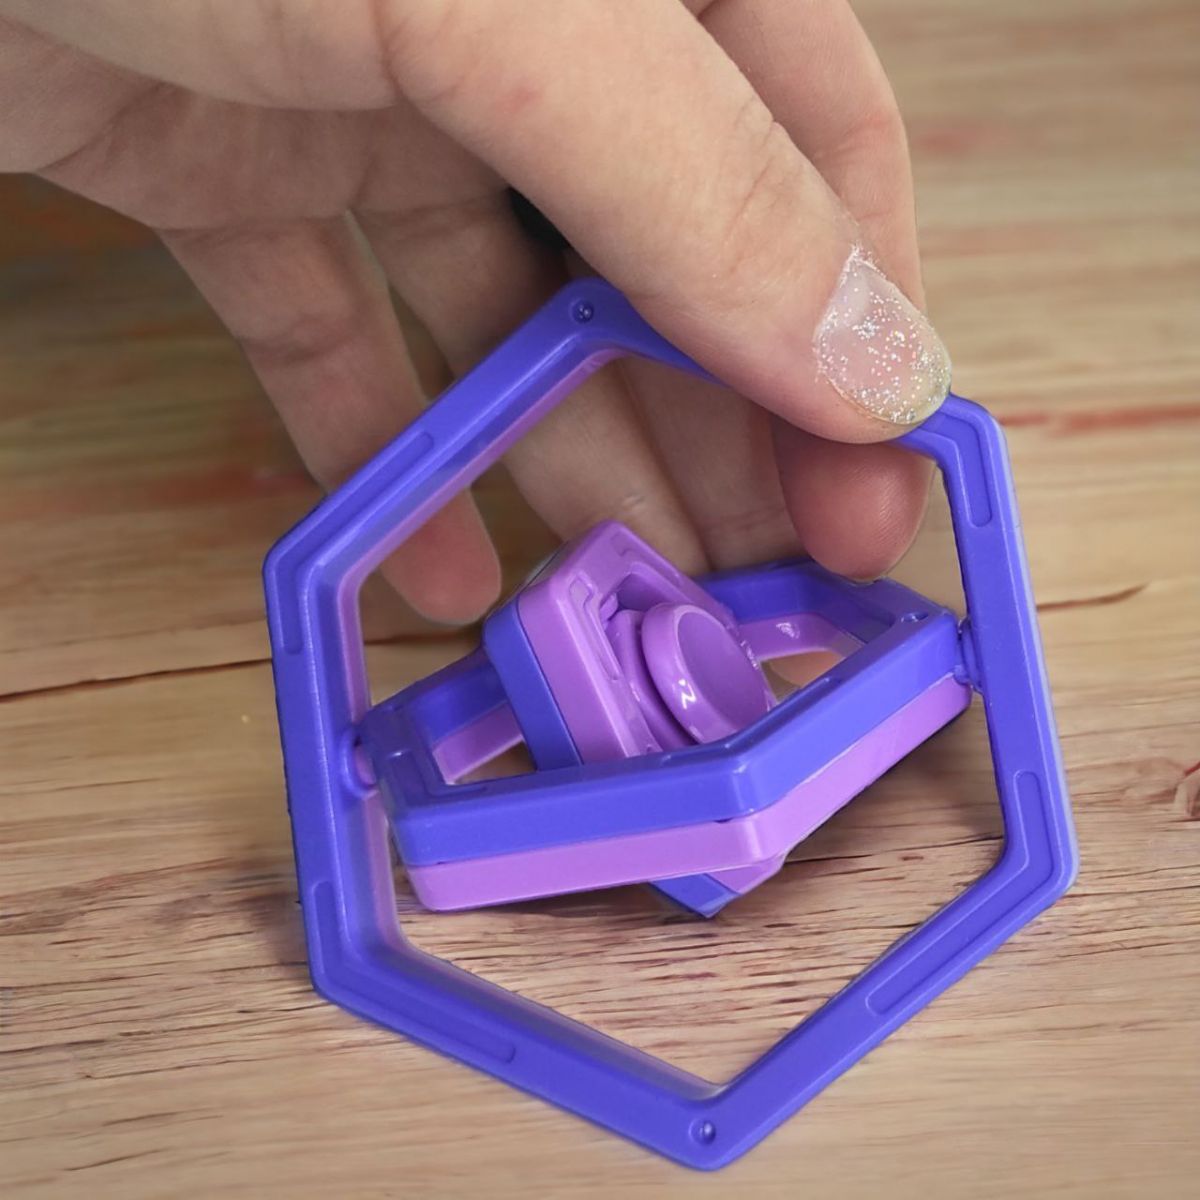 3D спинер-антистресс "Finger Gyro"